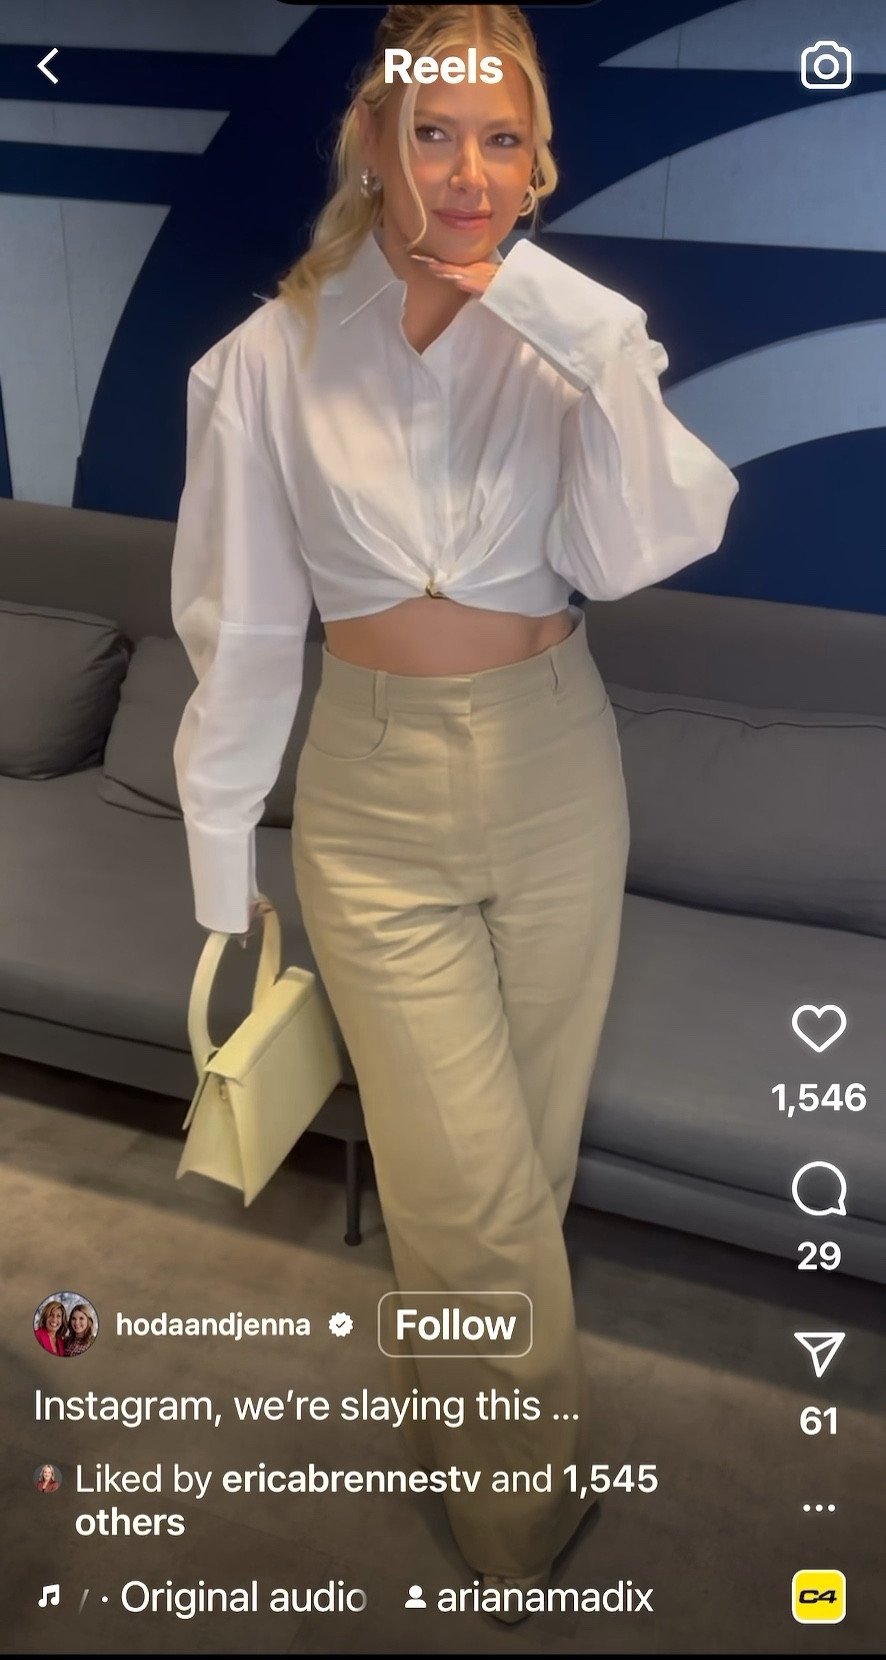 Ariana Madix's White Shirt and Beige Pants on Hoda and Jenna